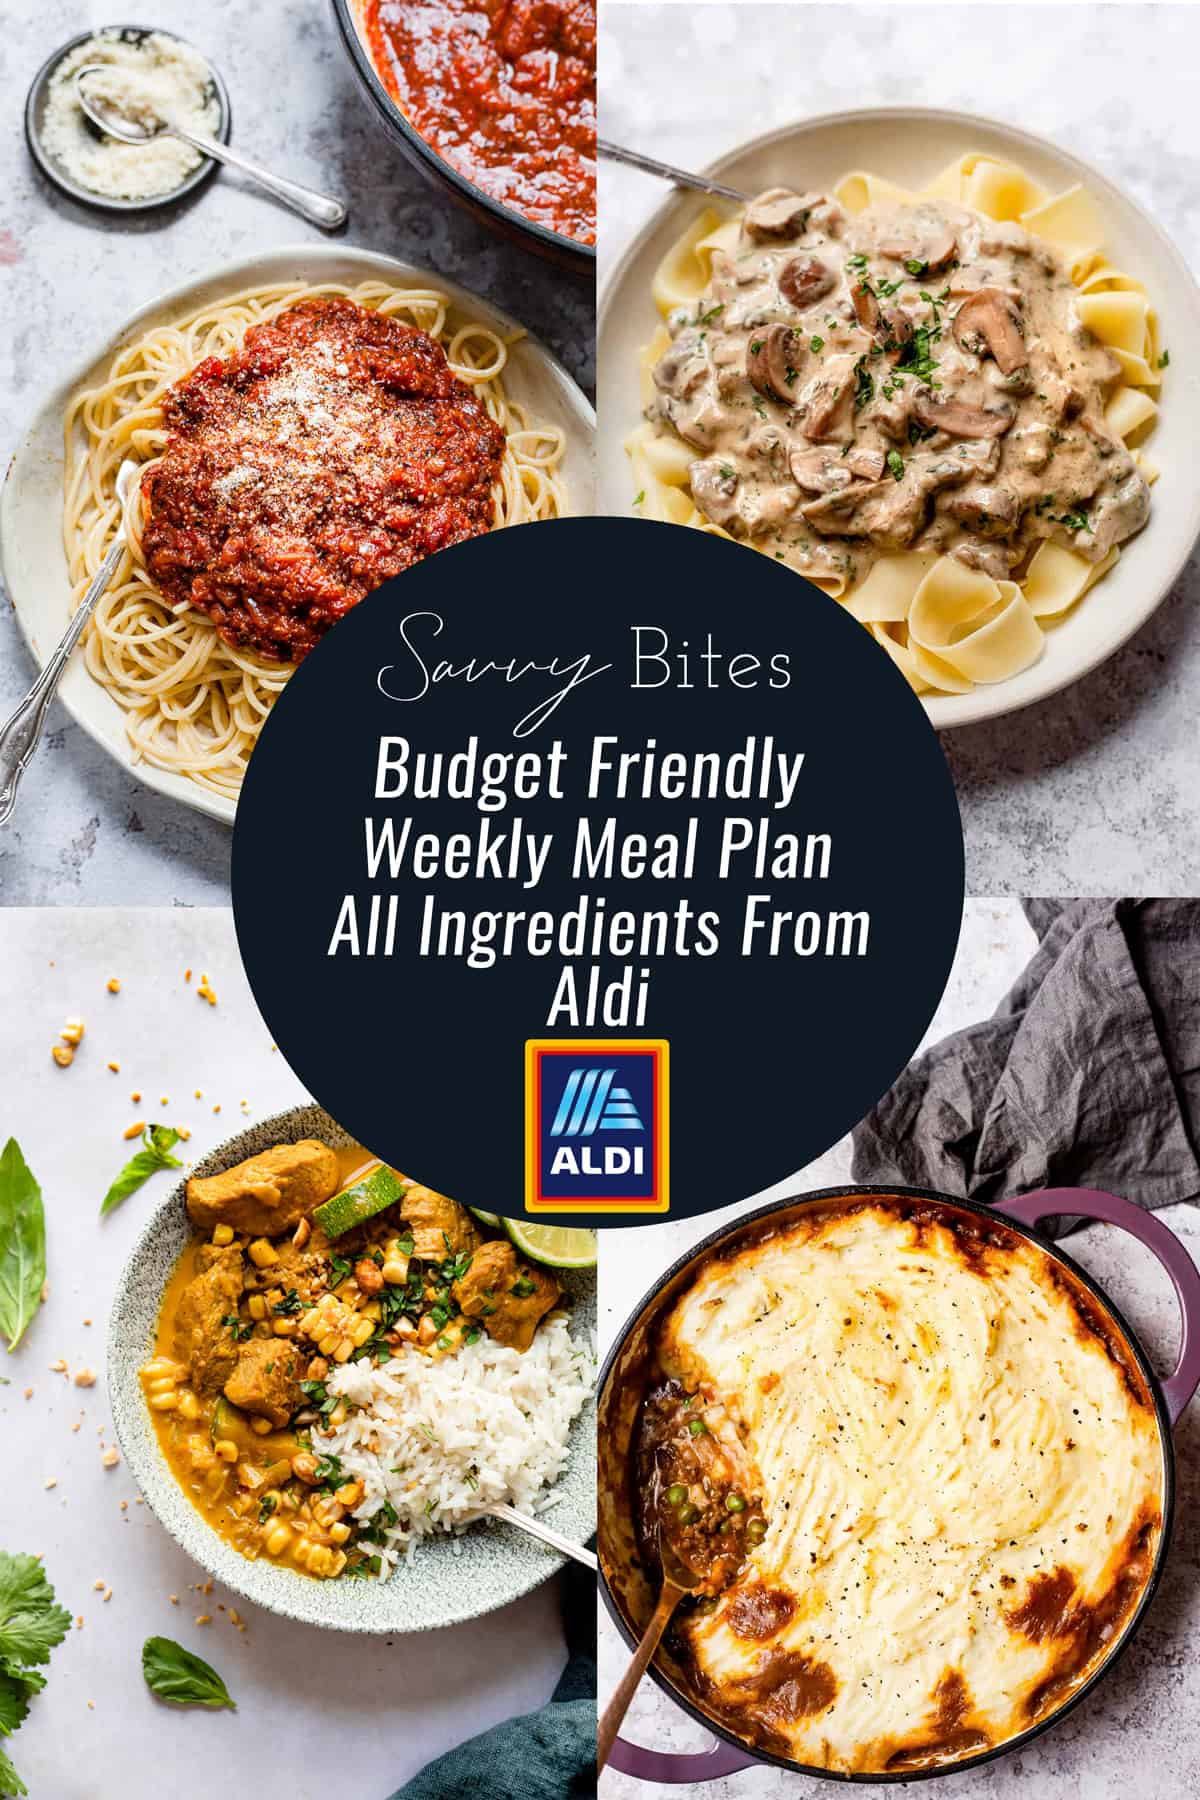 Aldi budget meal plan with photos.